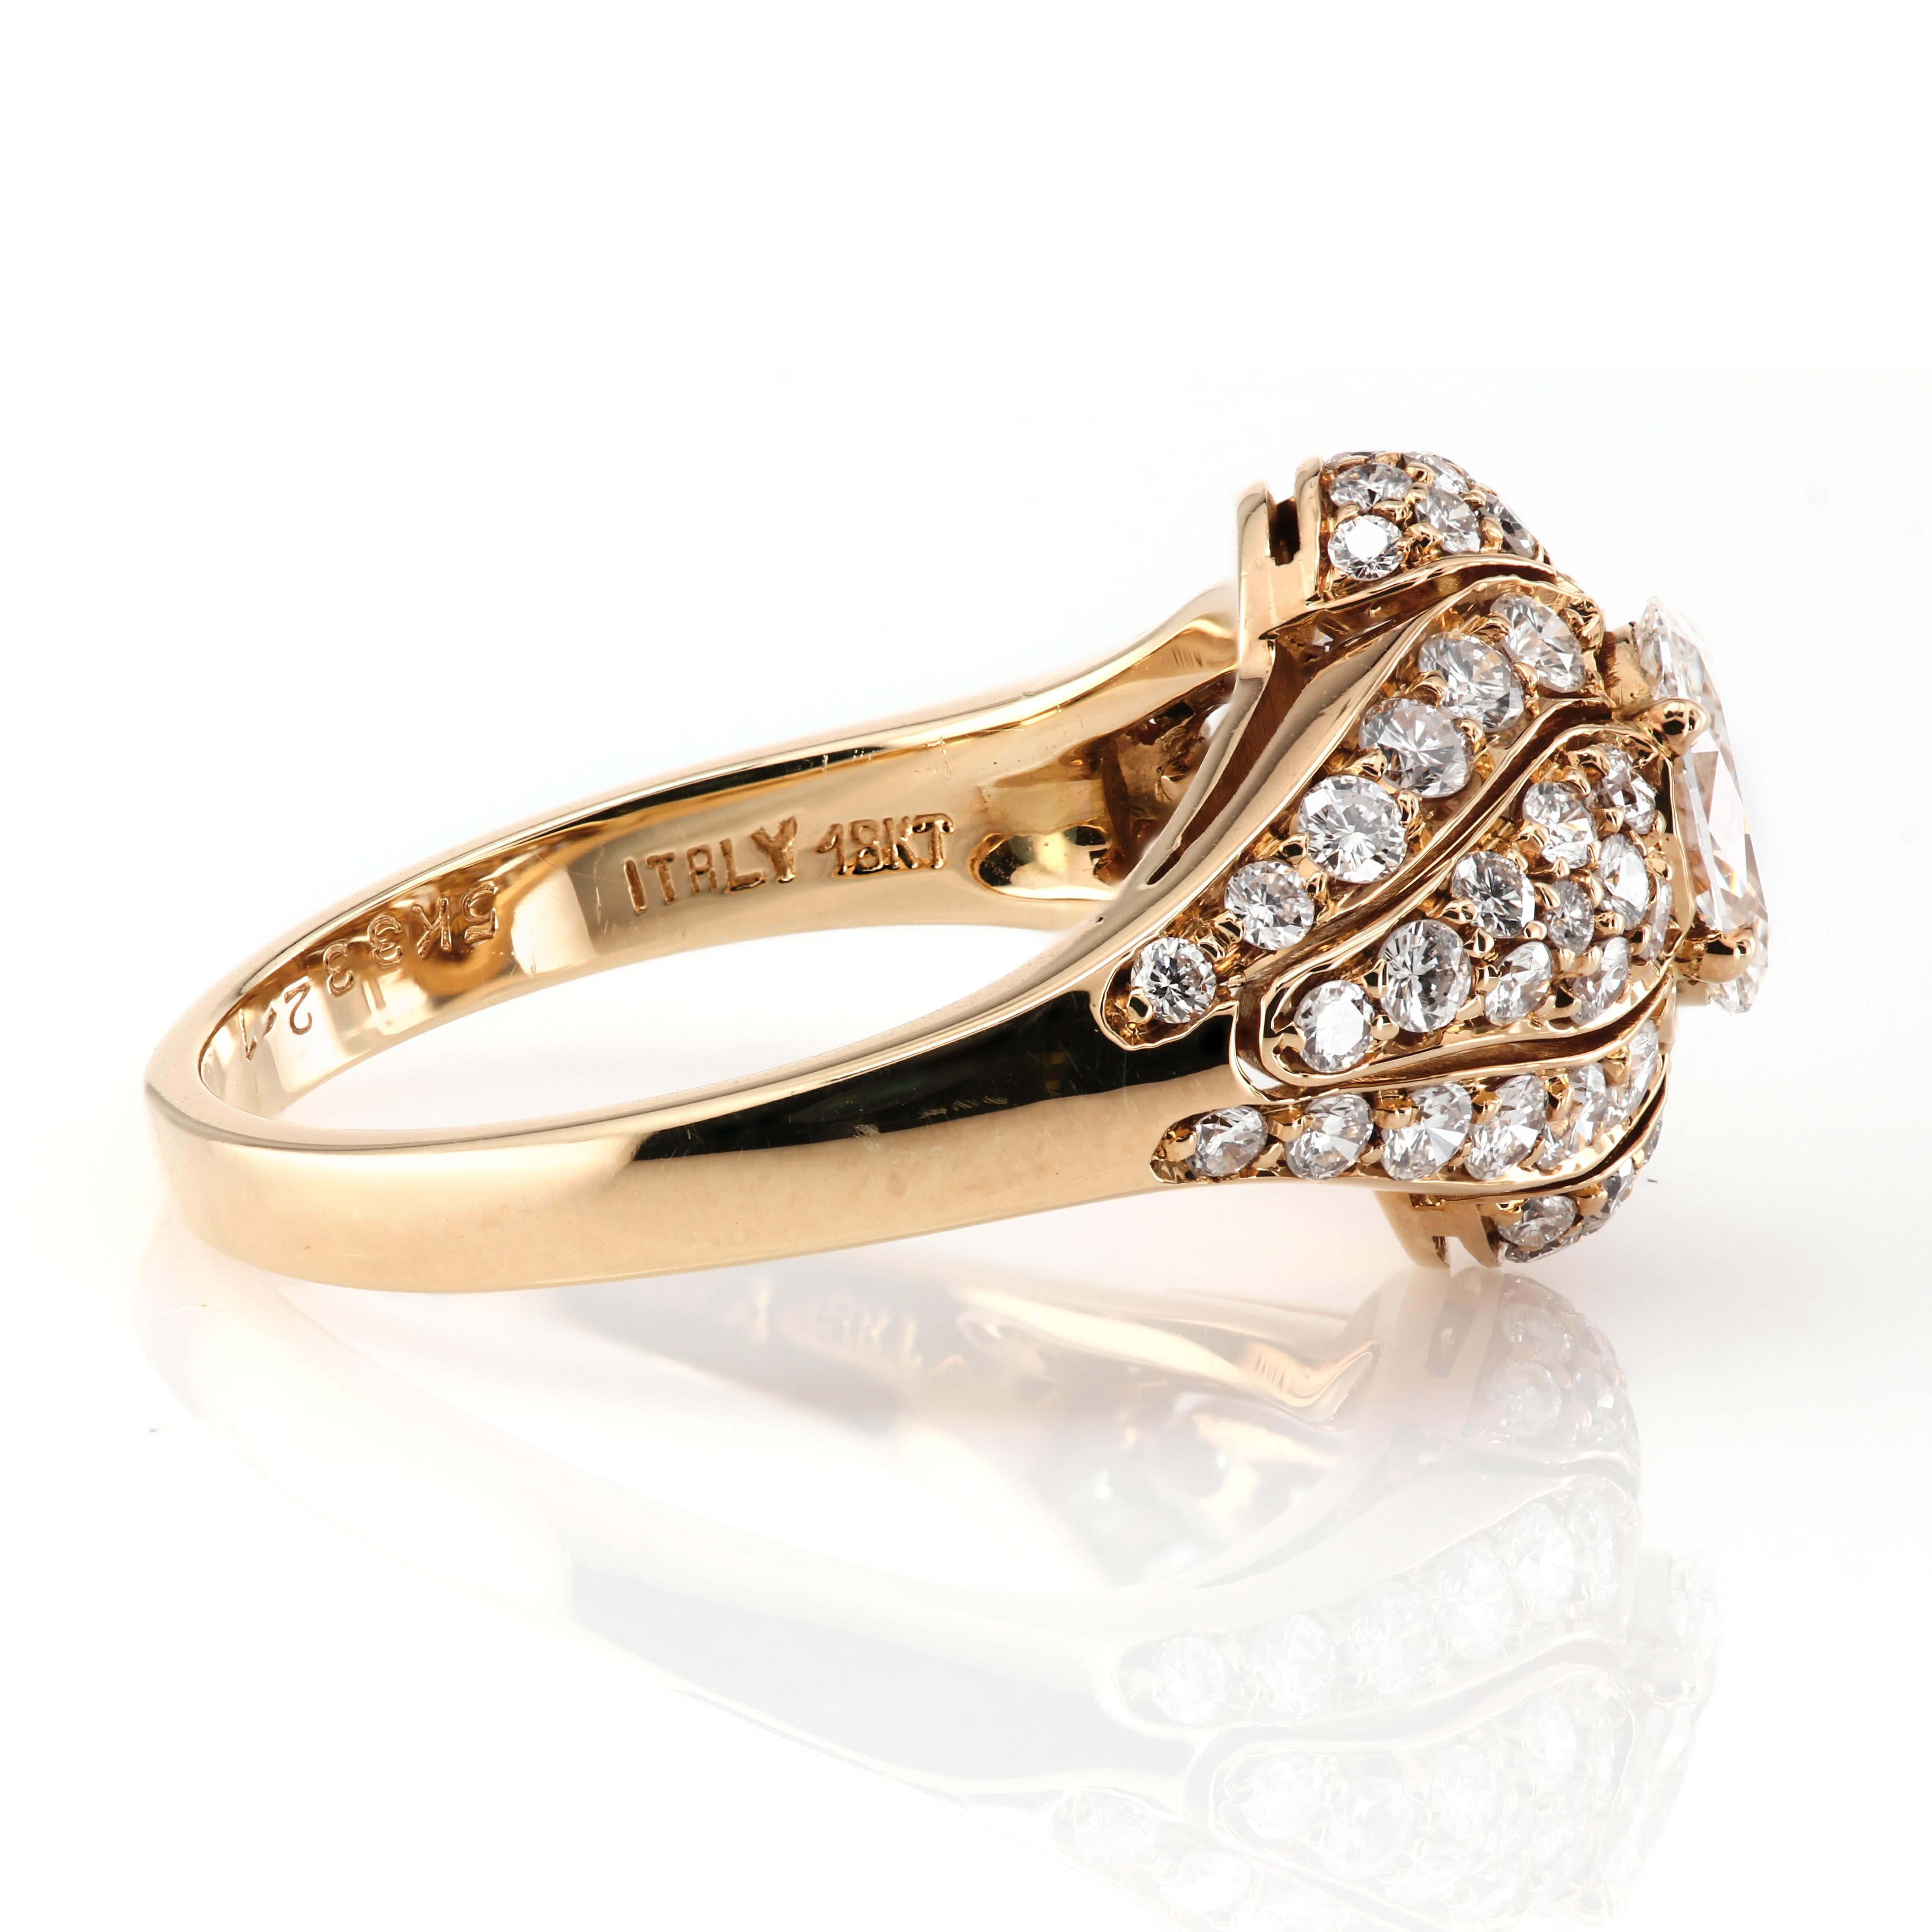 Modern Van Cleef & Arpels Pave 18 Karat Gold Ring with Oval Diamond VCA